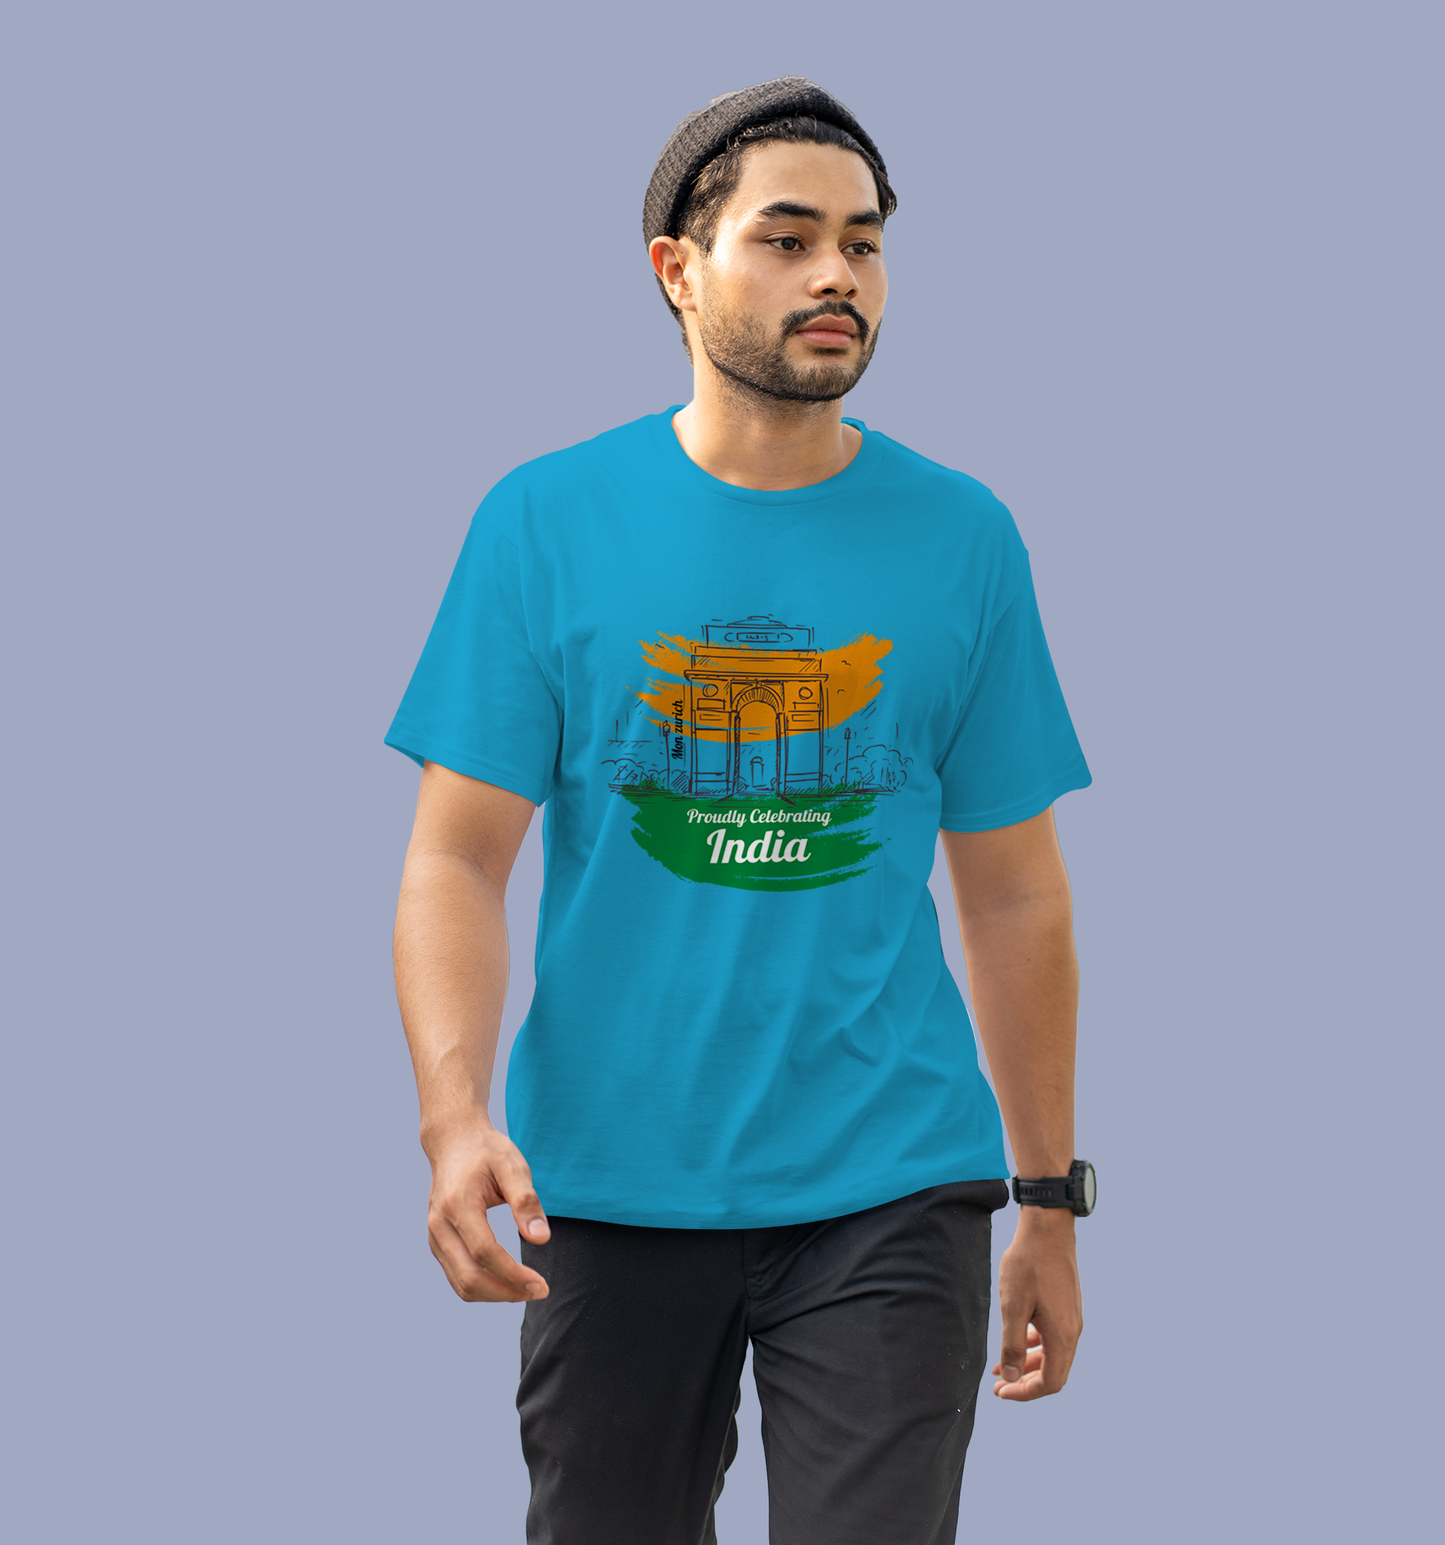 Proudly Celebrating India T-Shirt In Light - Mon Zurich Originals